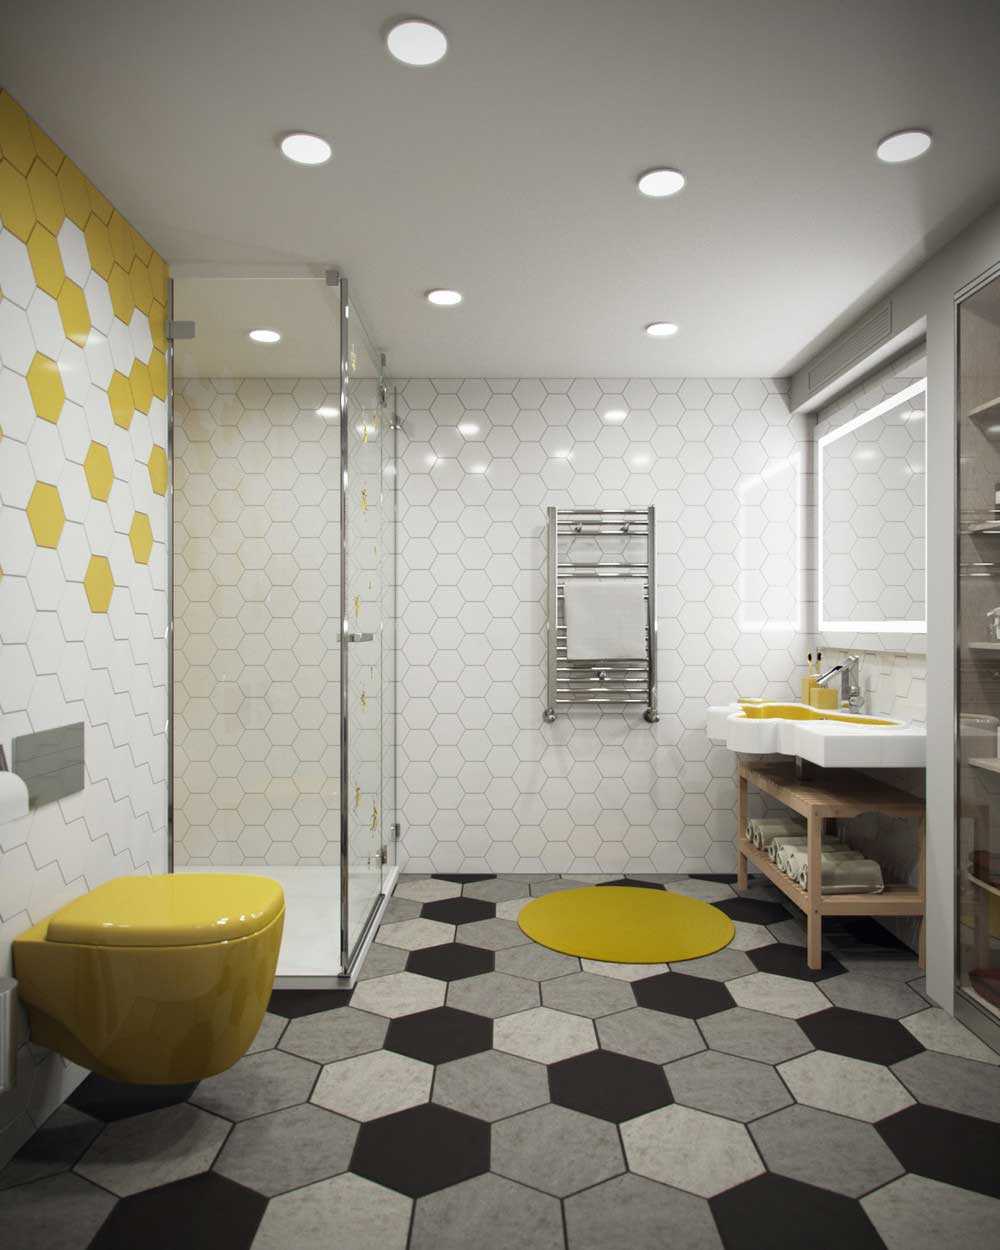 version of the modern bathroom design 6 sq.m